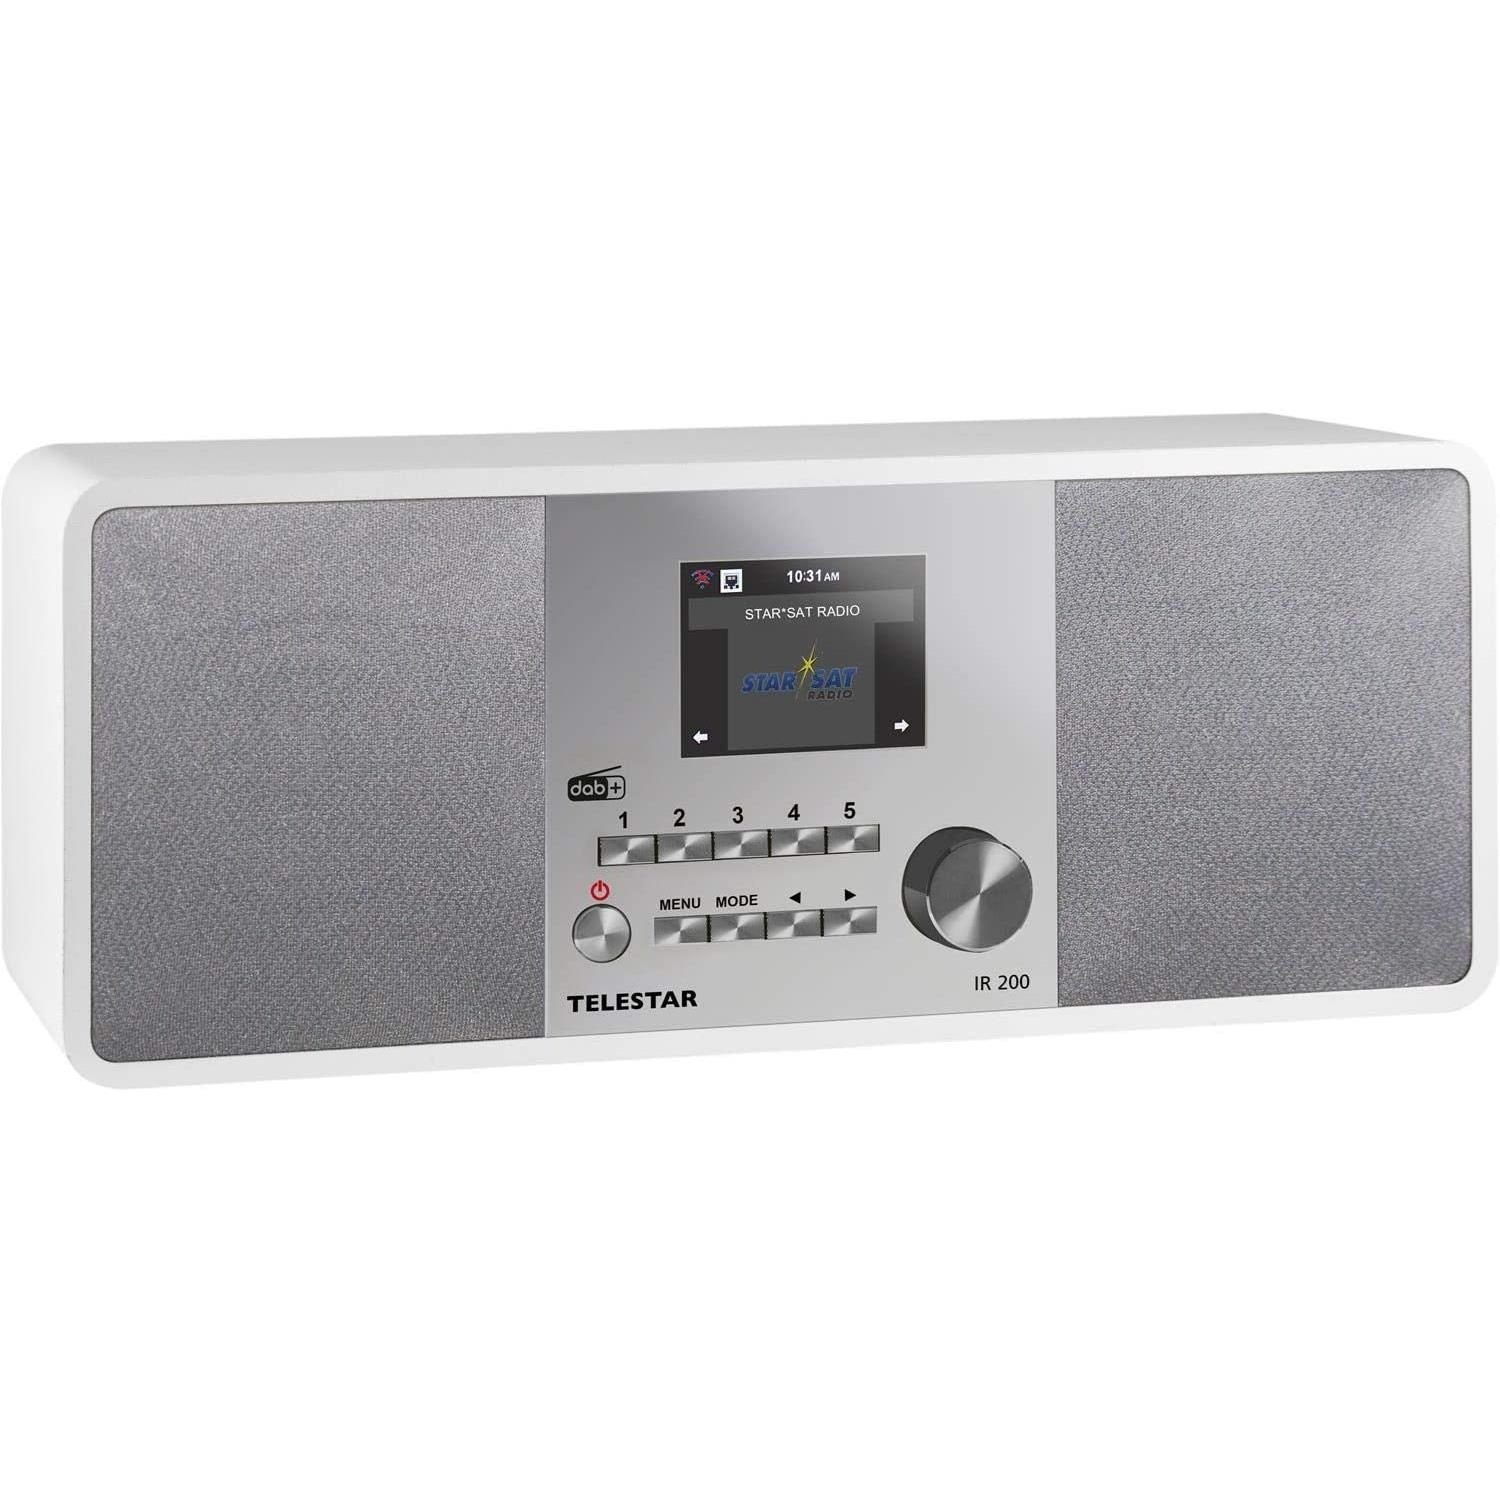 TELESTAR IR 200 Internet/DAB+ Digitalradio Stereo Sound UKW WLAN, LAN, Aux-In Digitalradio (DAB)